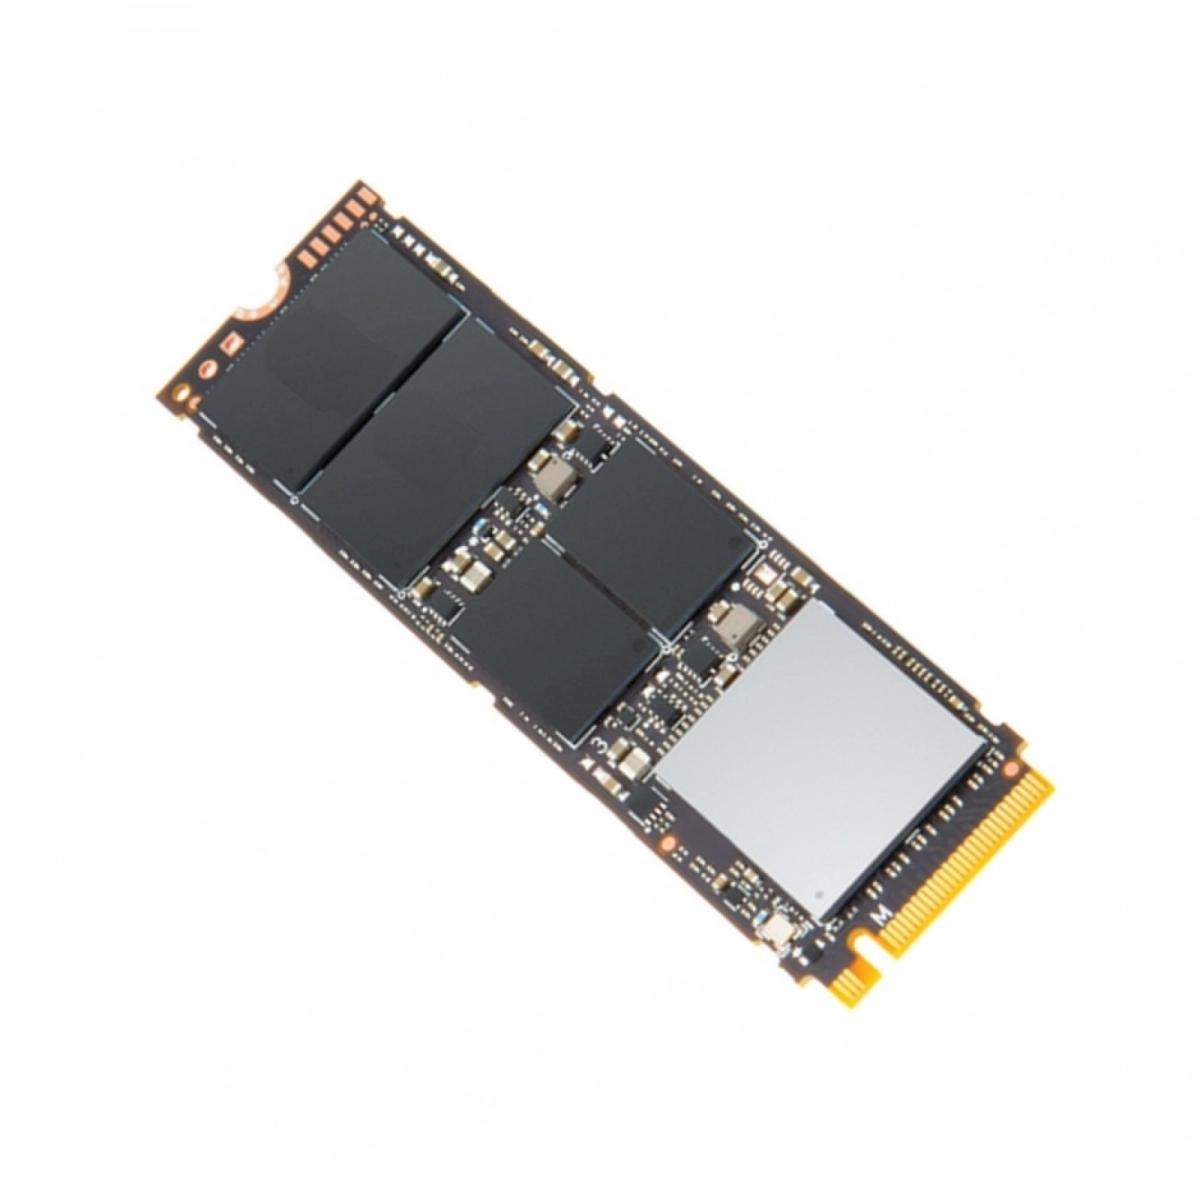 Notebook-Festplatte 256GB, SSD PCIe NVMe 3.1 x4 für HP EliteBook 820 G3